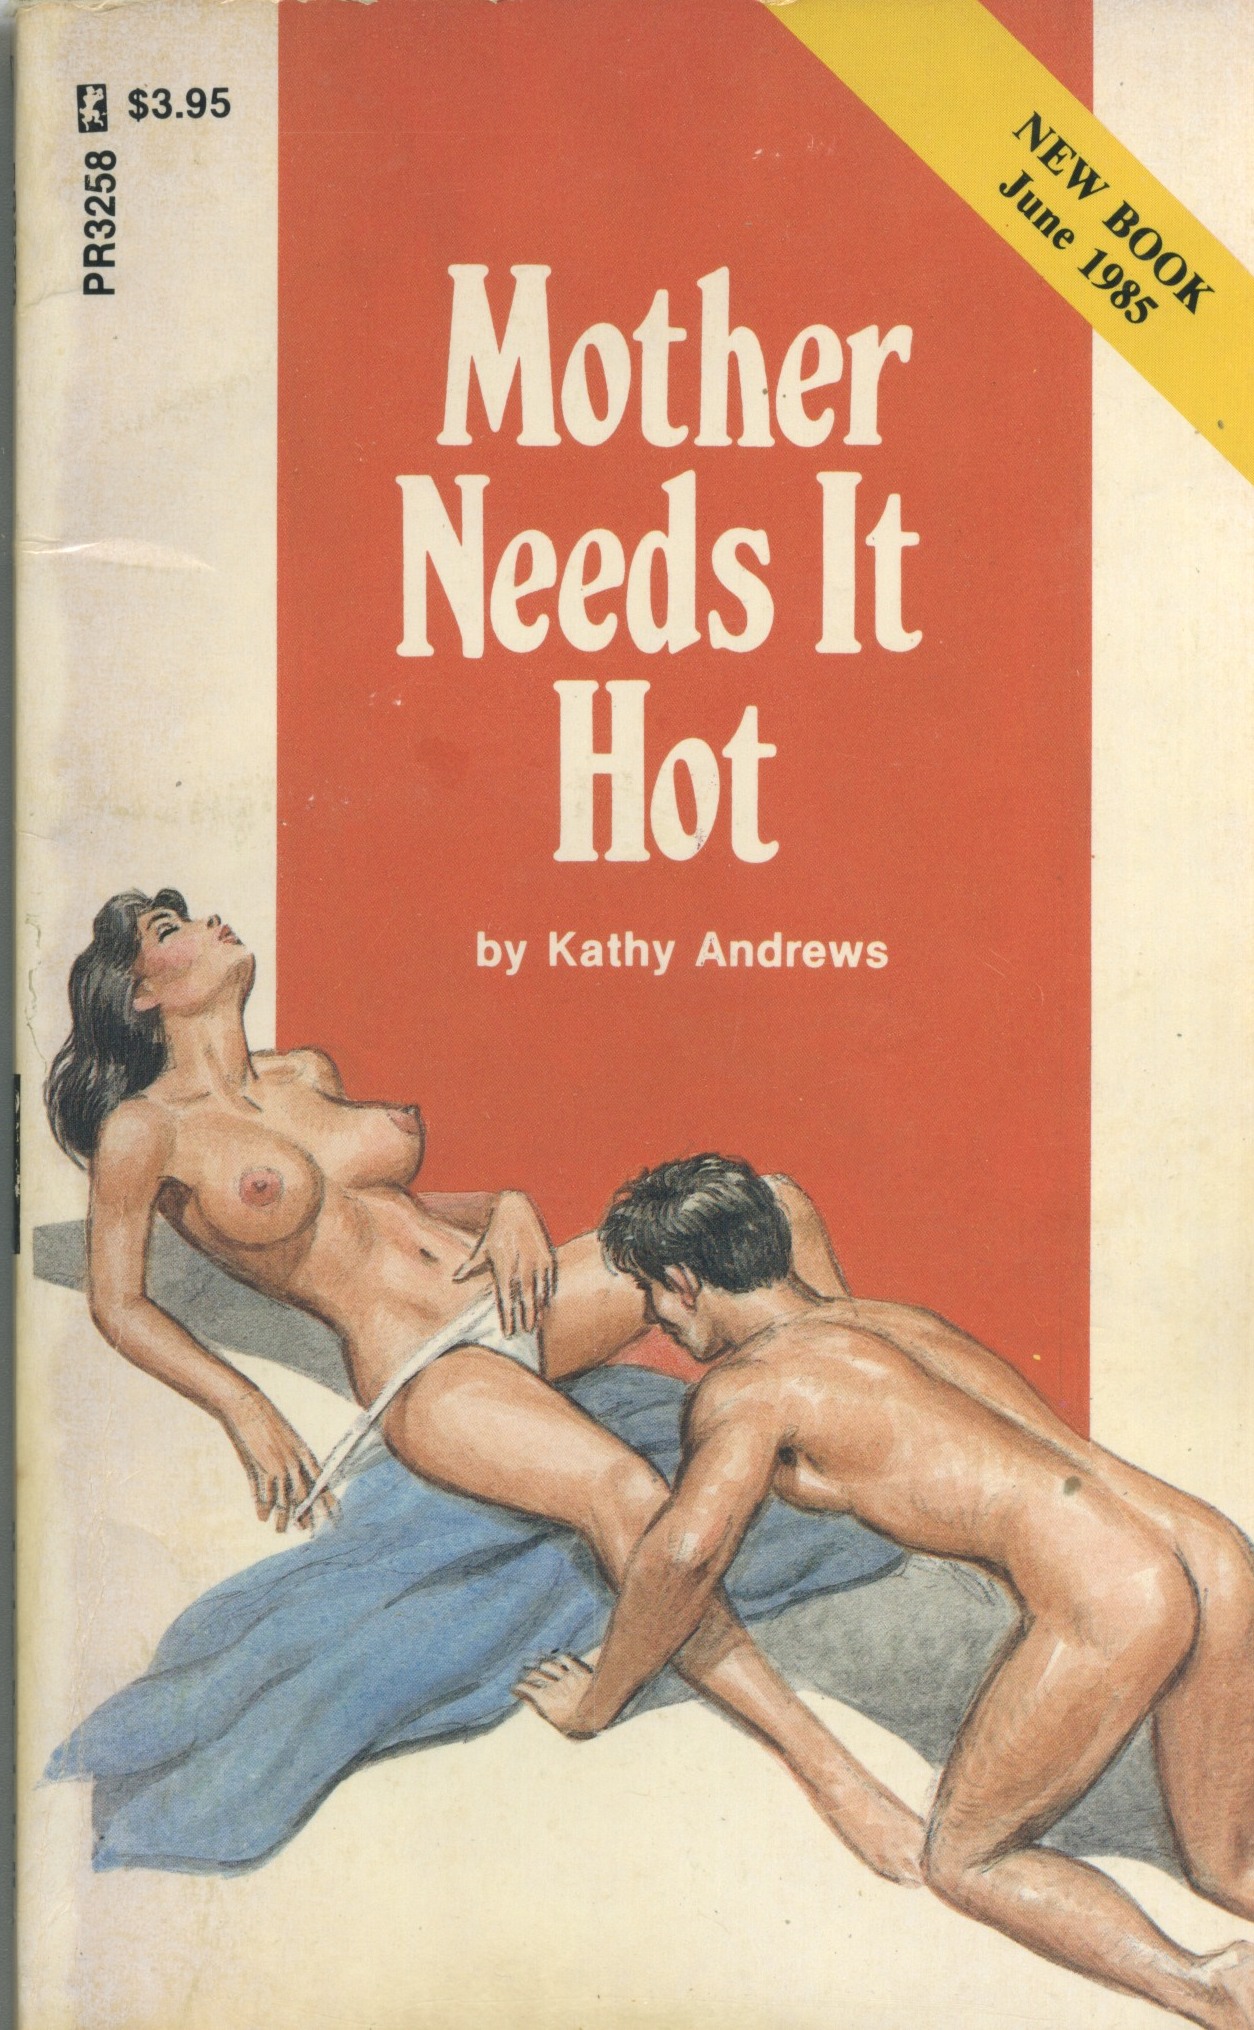 Mother needs it hot